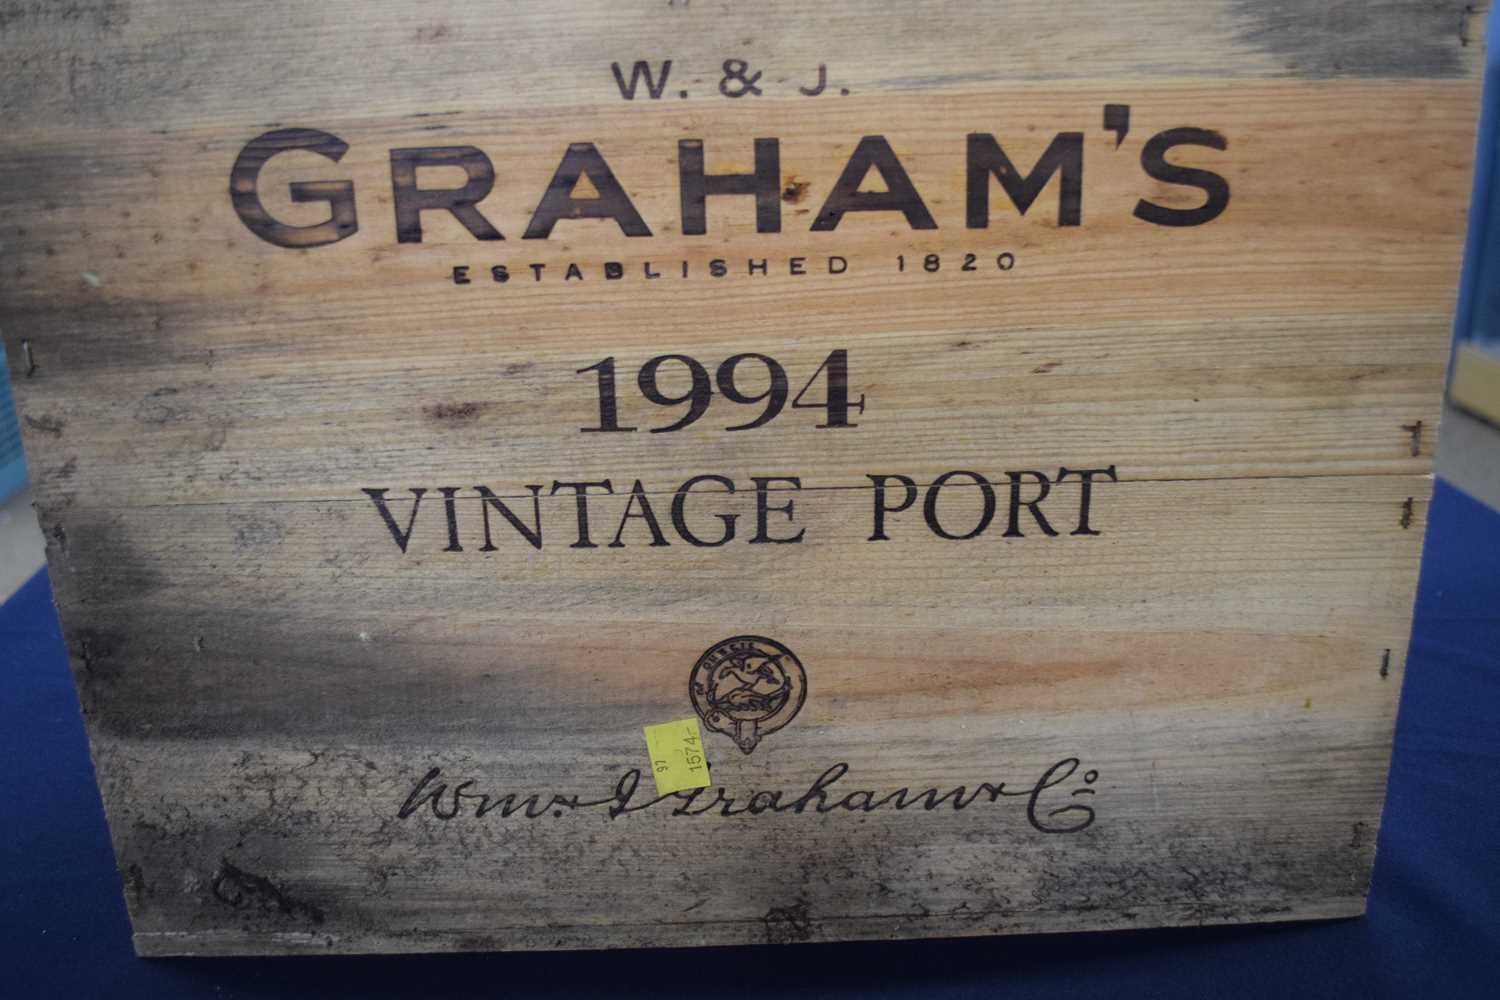 12 bottles of 1994 port in original wooden case